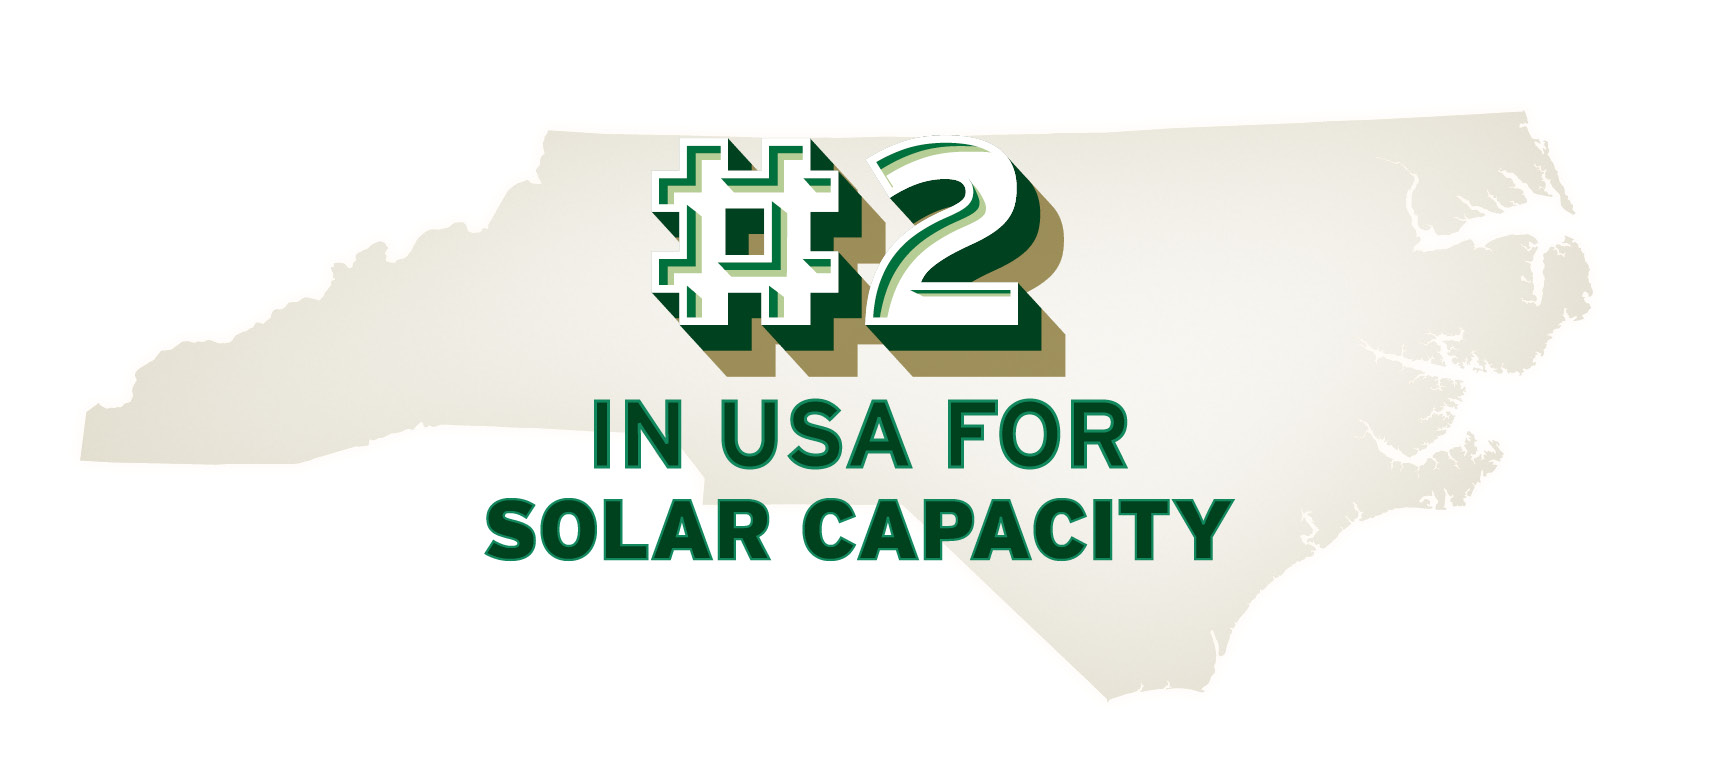 #2 in USA for solar capacity